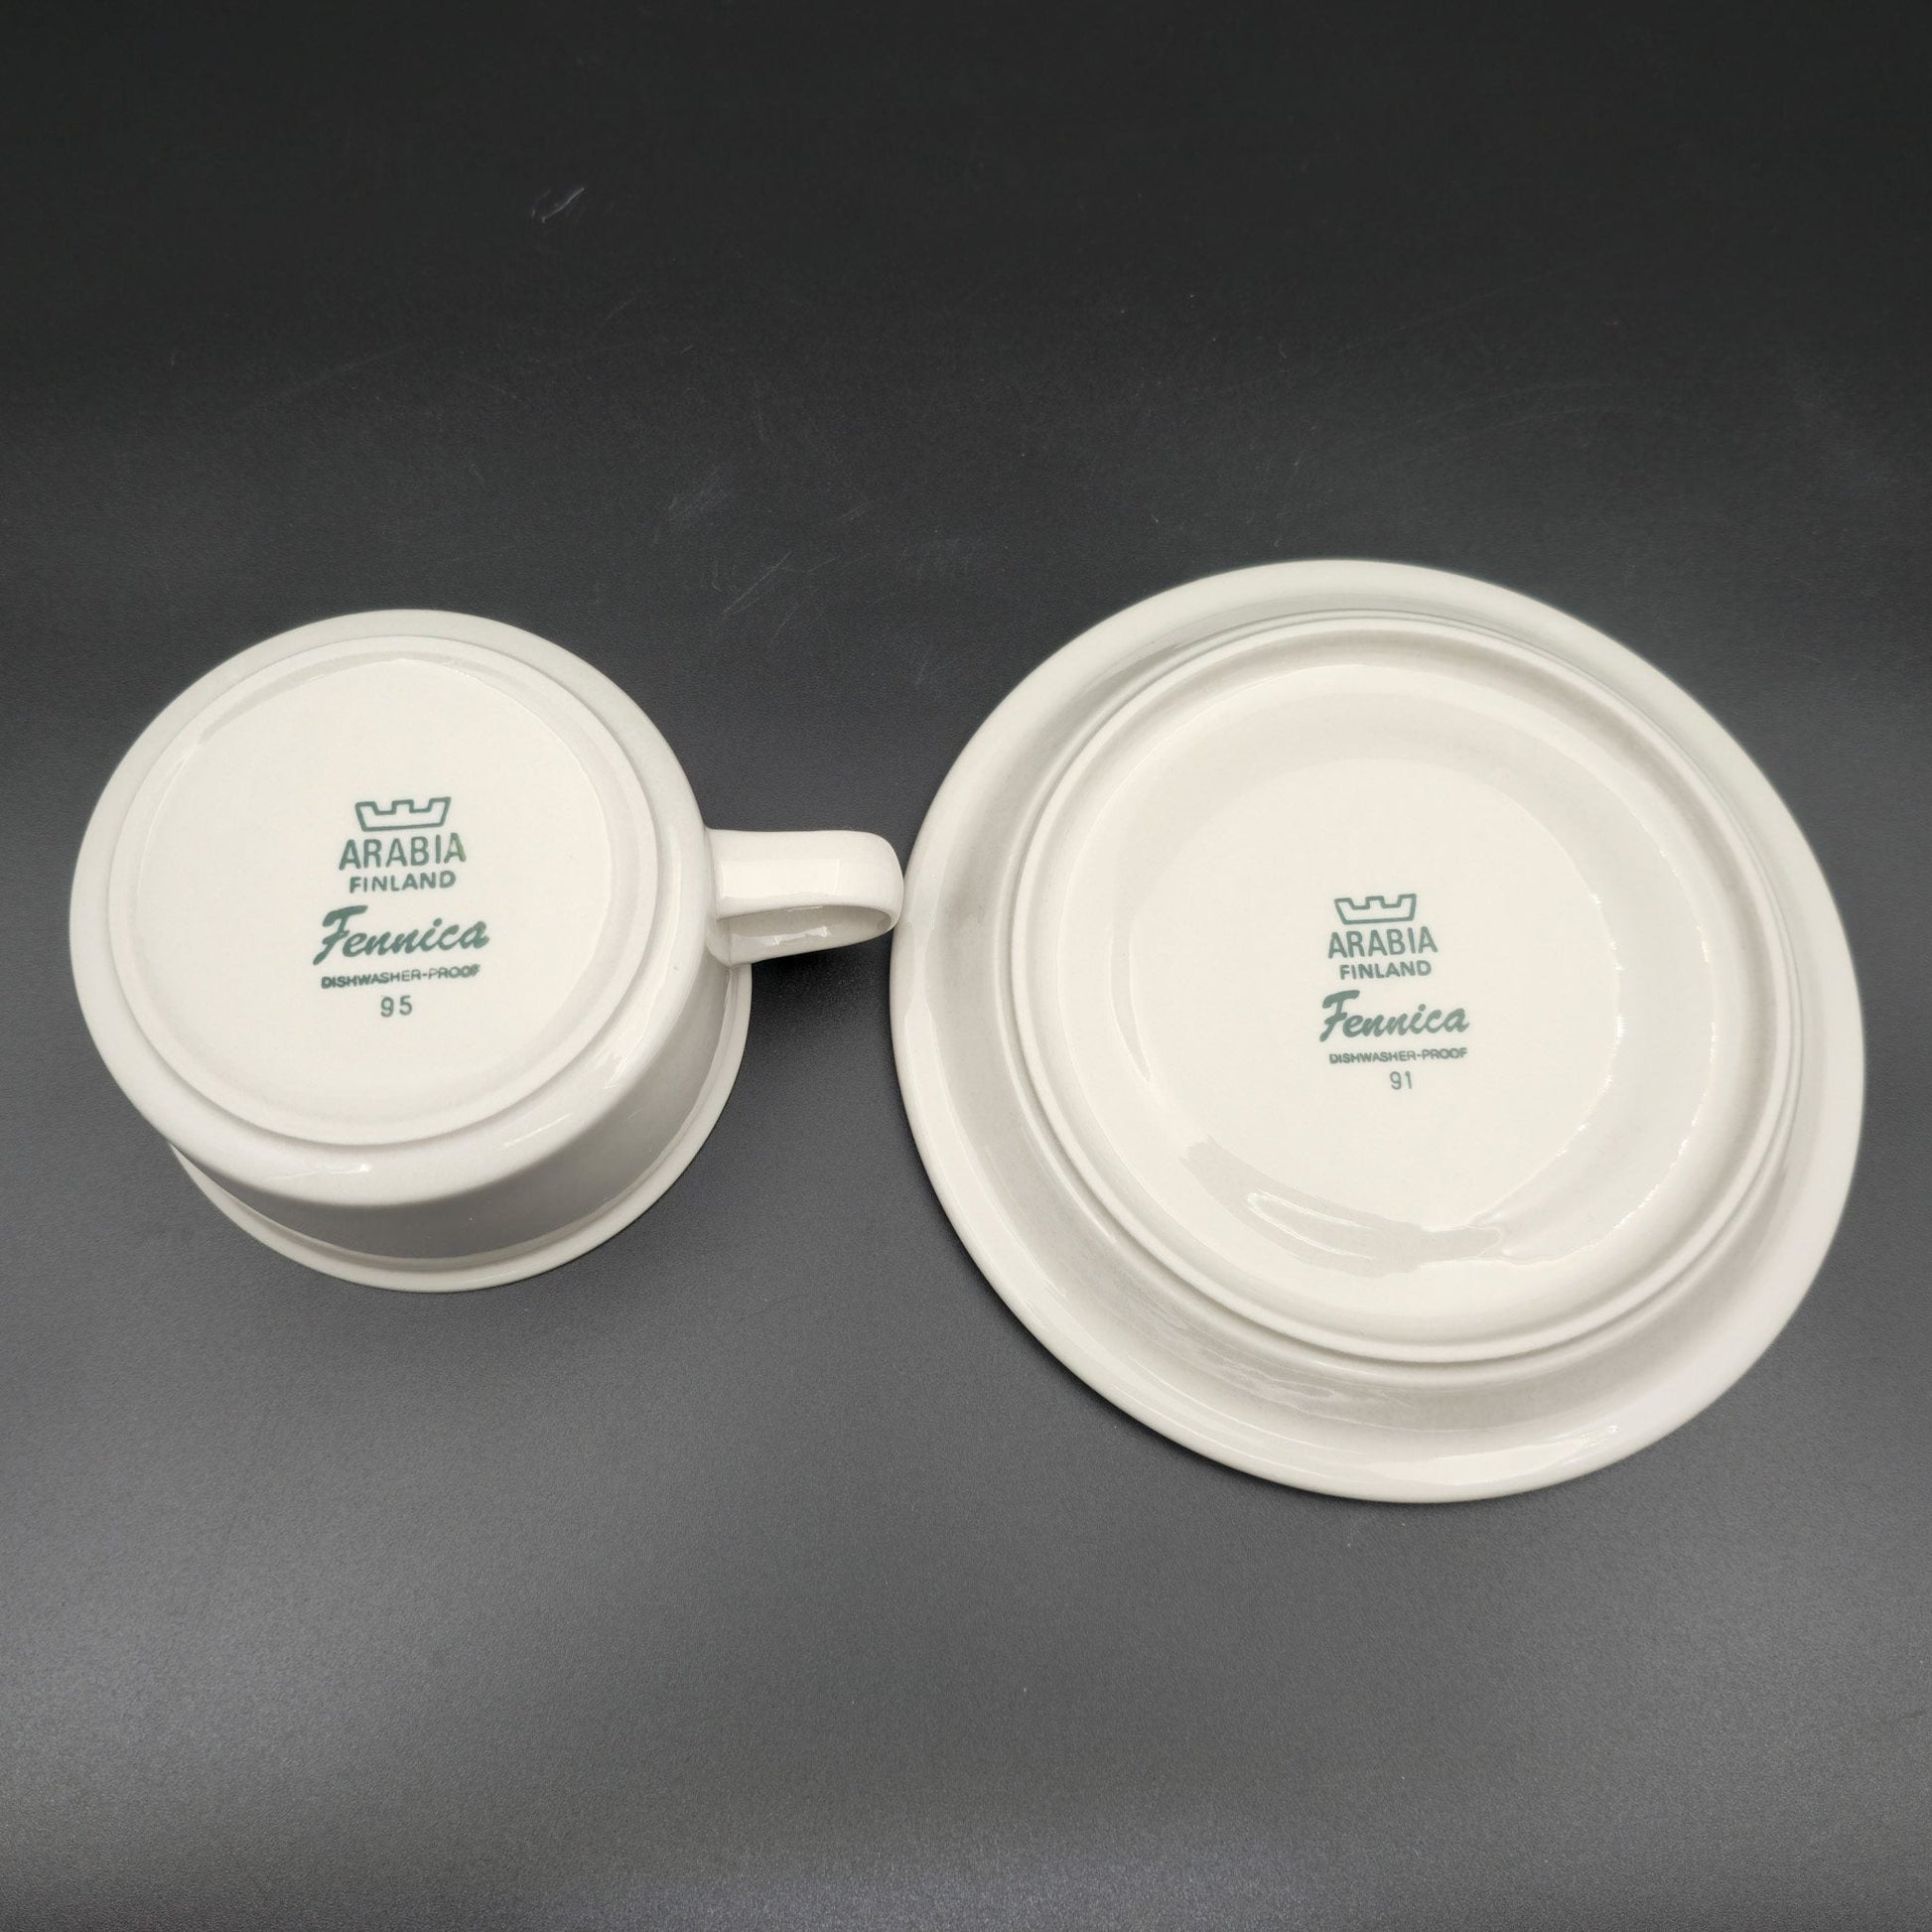 4 x Arabia RICHARD LINDH Tableware FENNICA Stoneware Tea Cup + Saucer Set Mollaris.com 